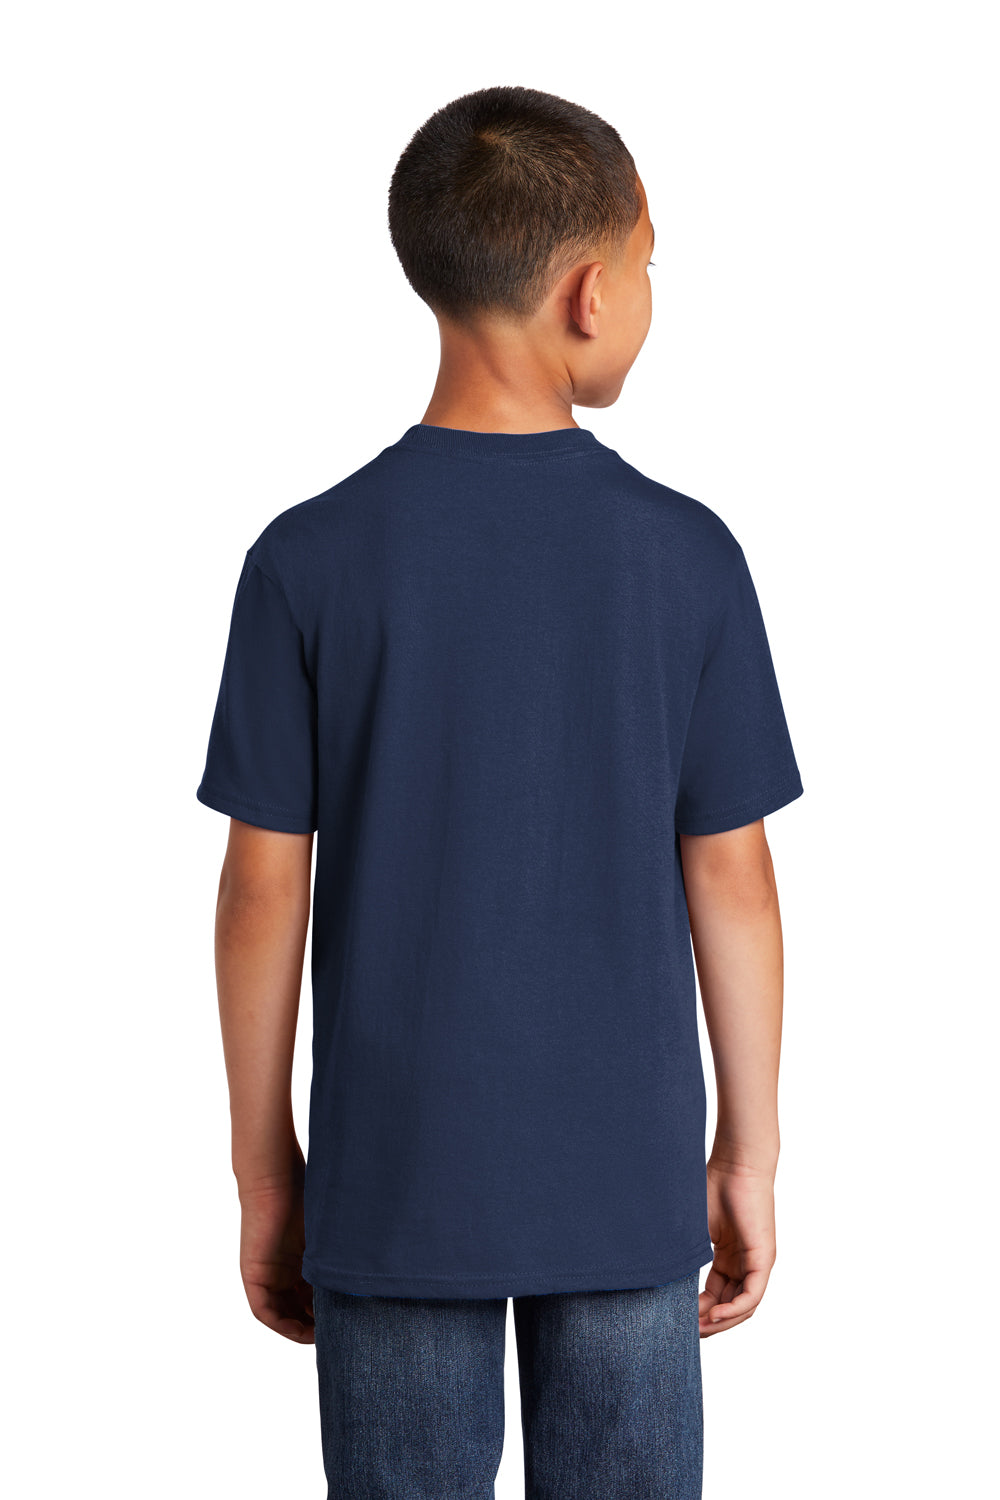 Port & Company PC54Y Youth Core Short Sleeve Crewneck T-Shirt Navy Blue Back